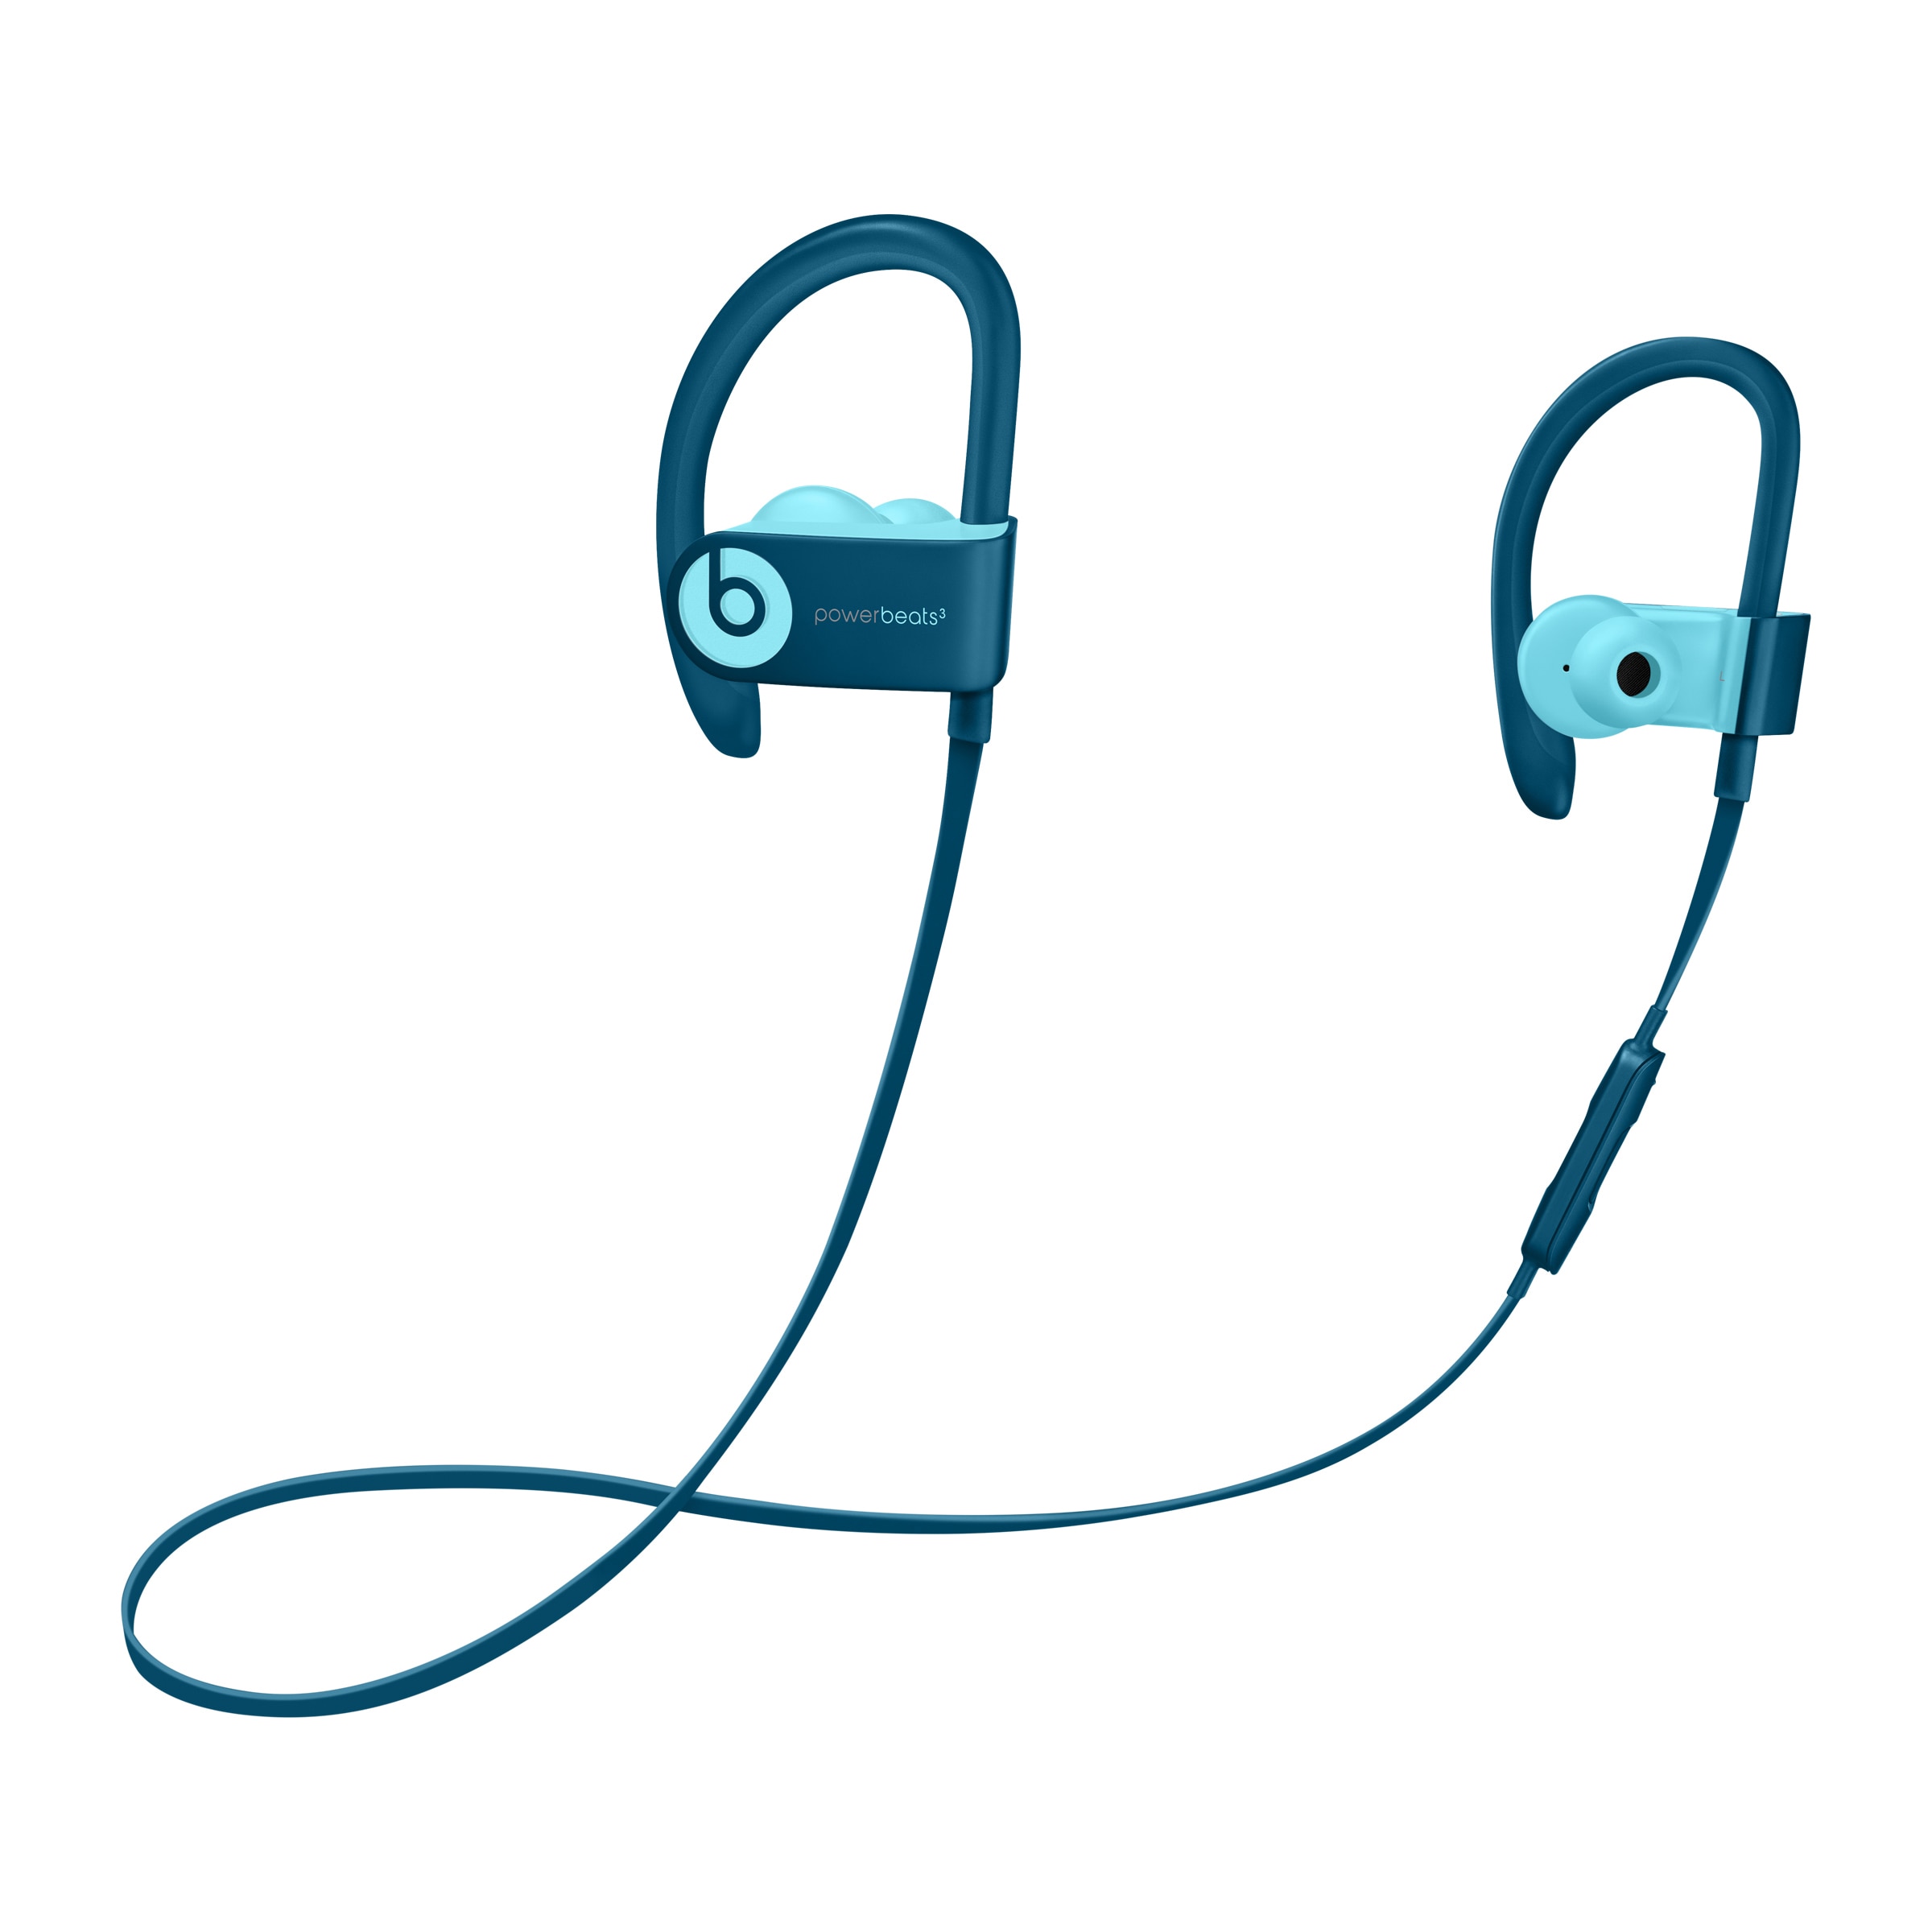 powerbeats 3 ear tips blue